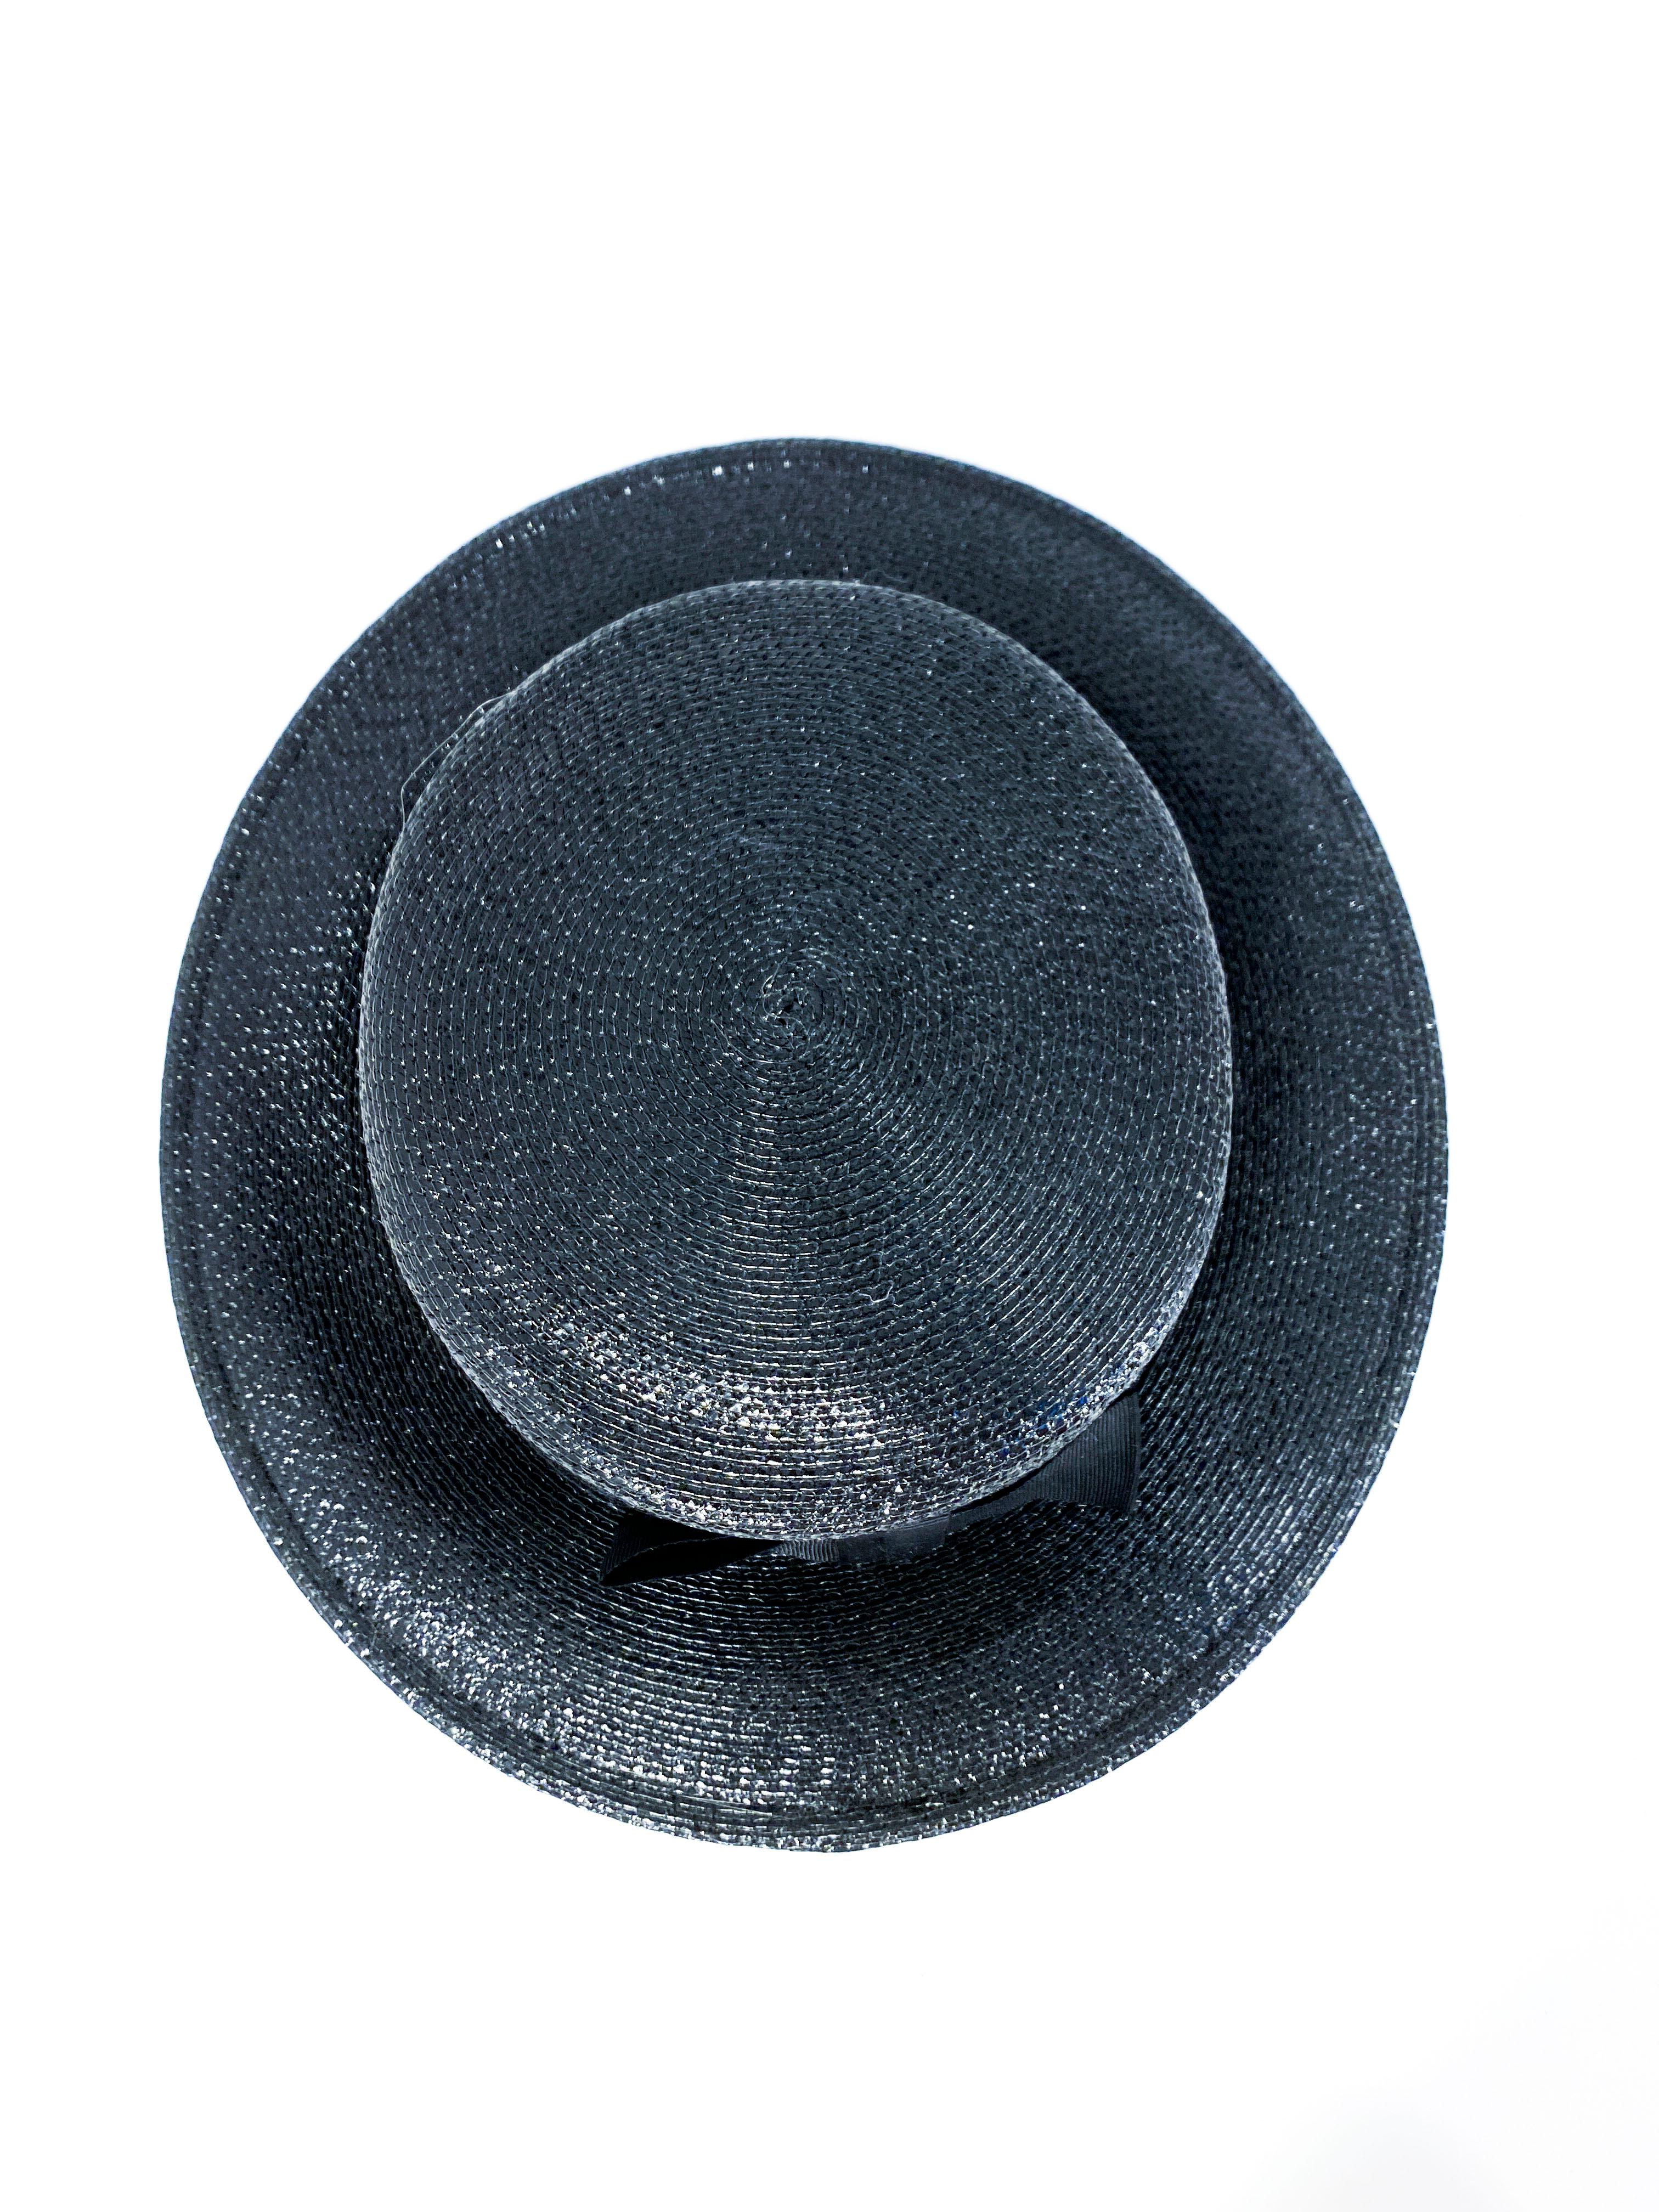 1960s Schiaparelli Black Coated Straw Hat 1